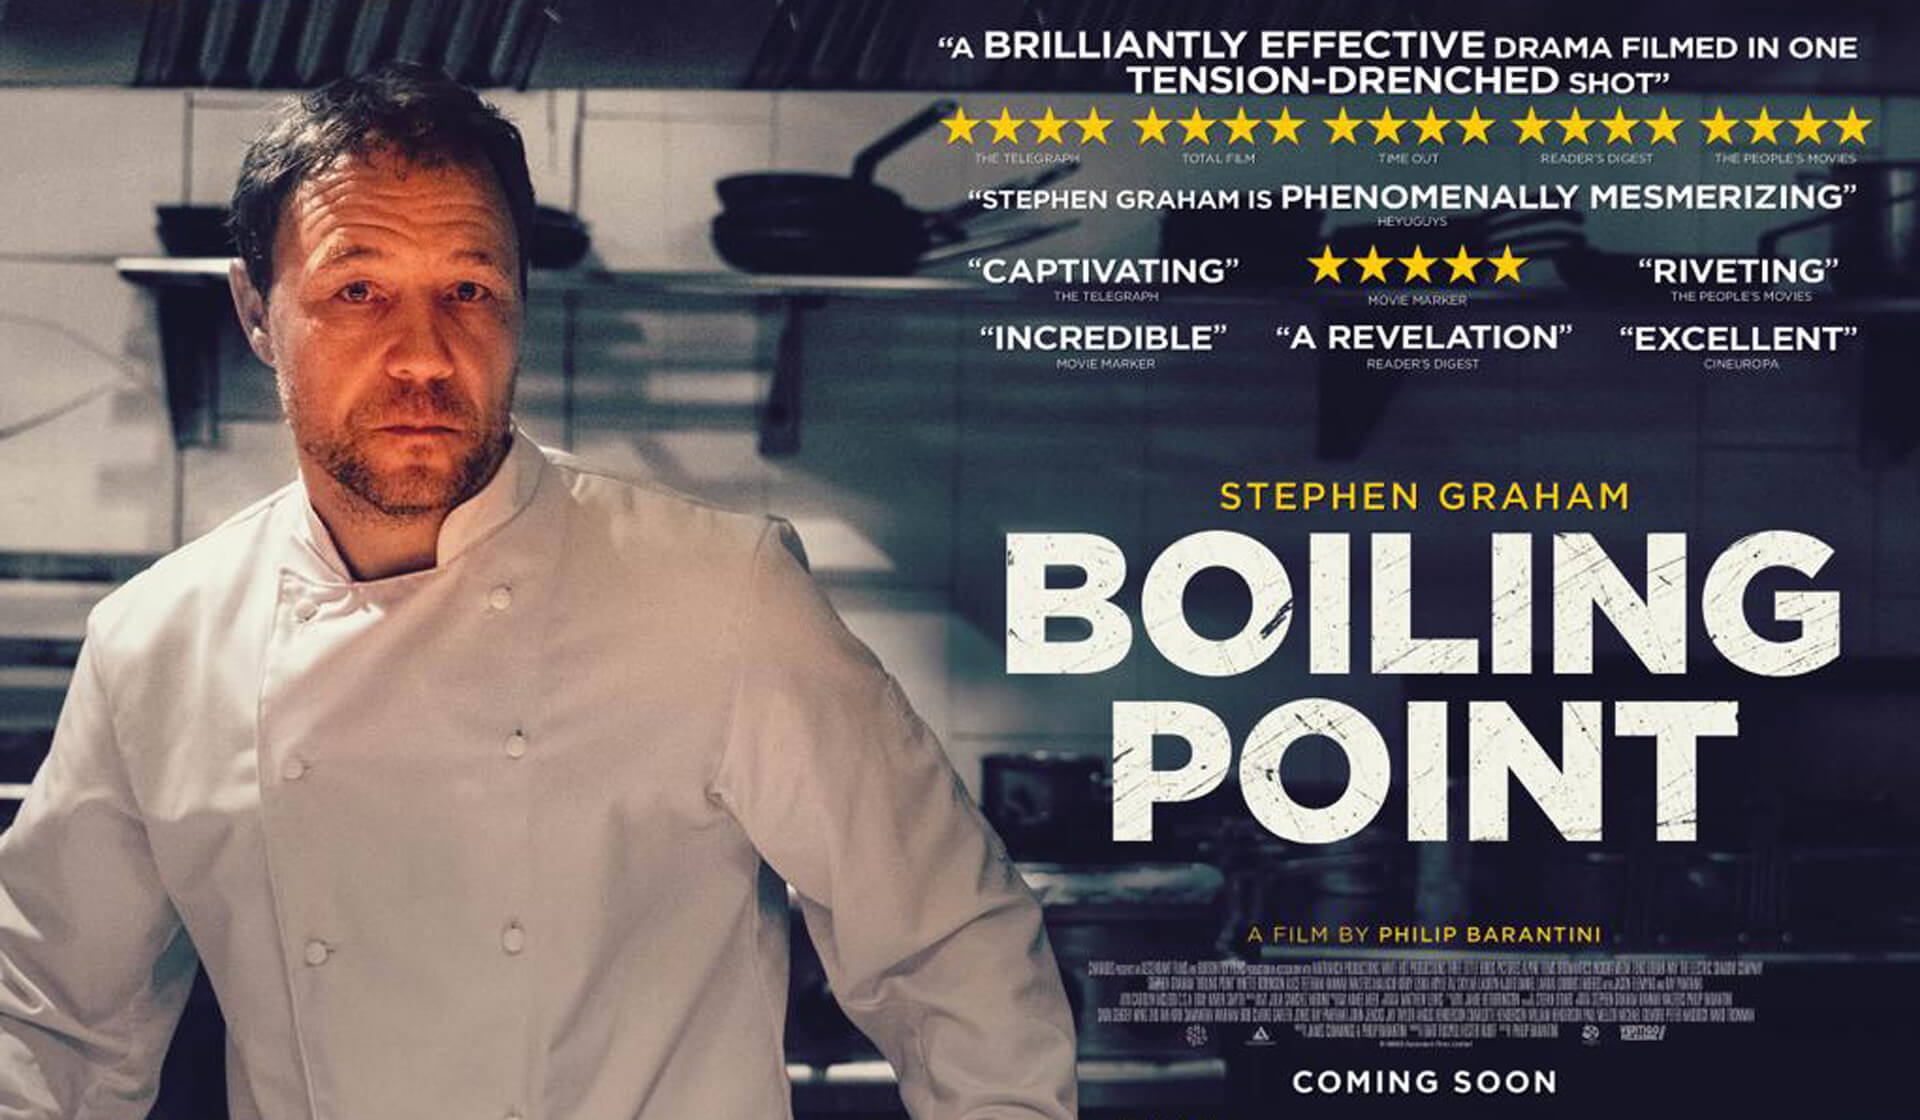 Boiling Point Film - Stephen Graham - Mellor&Smith Paul Mellor